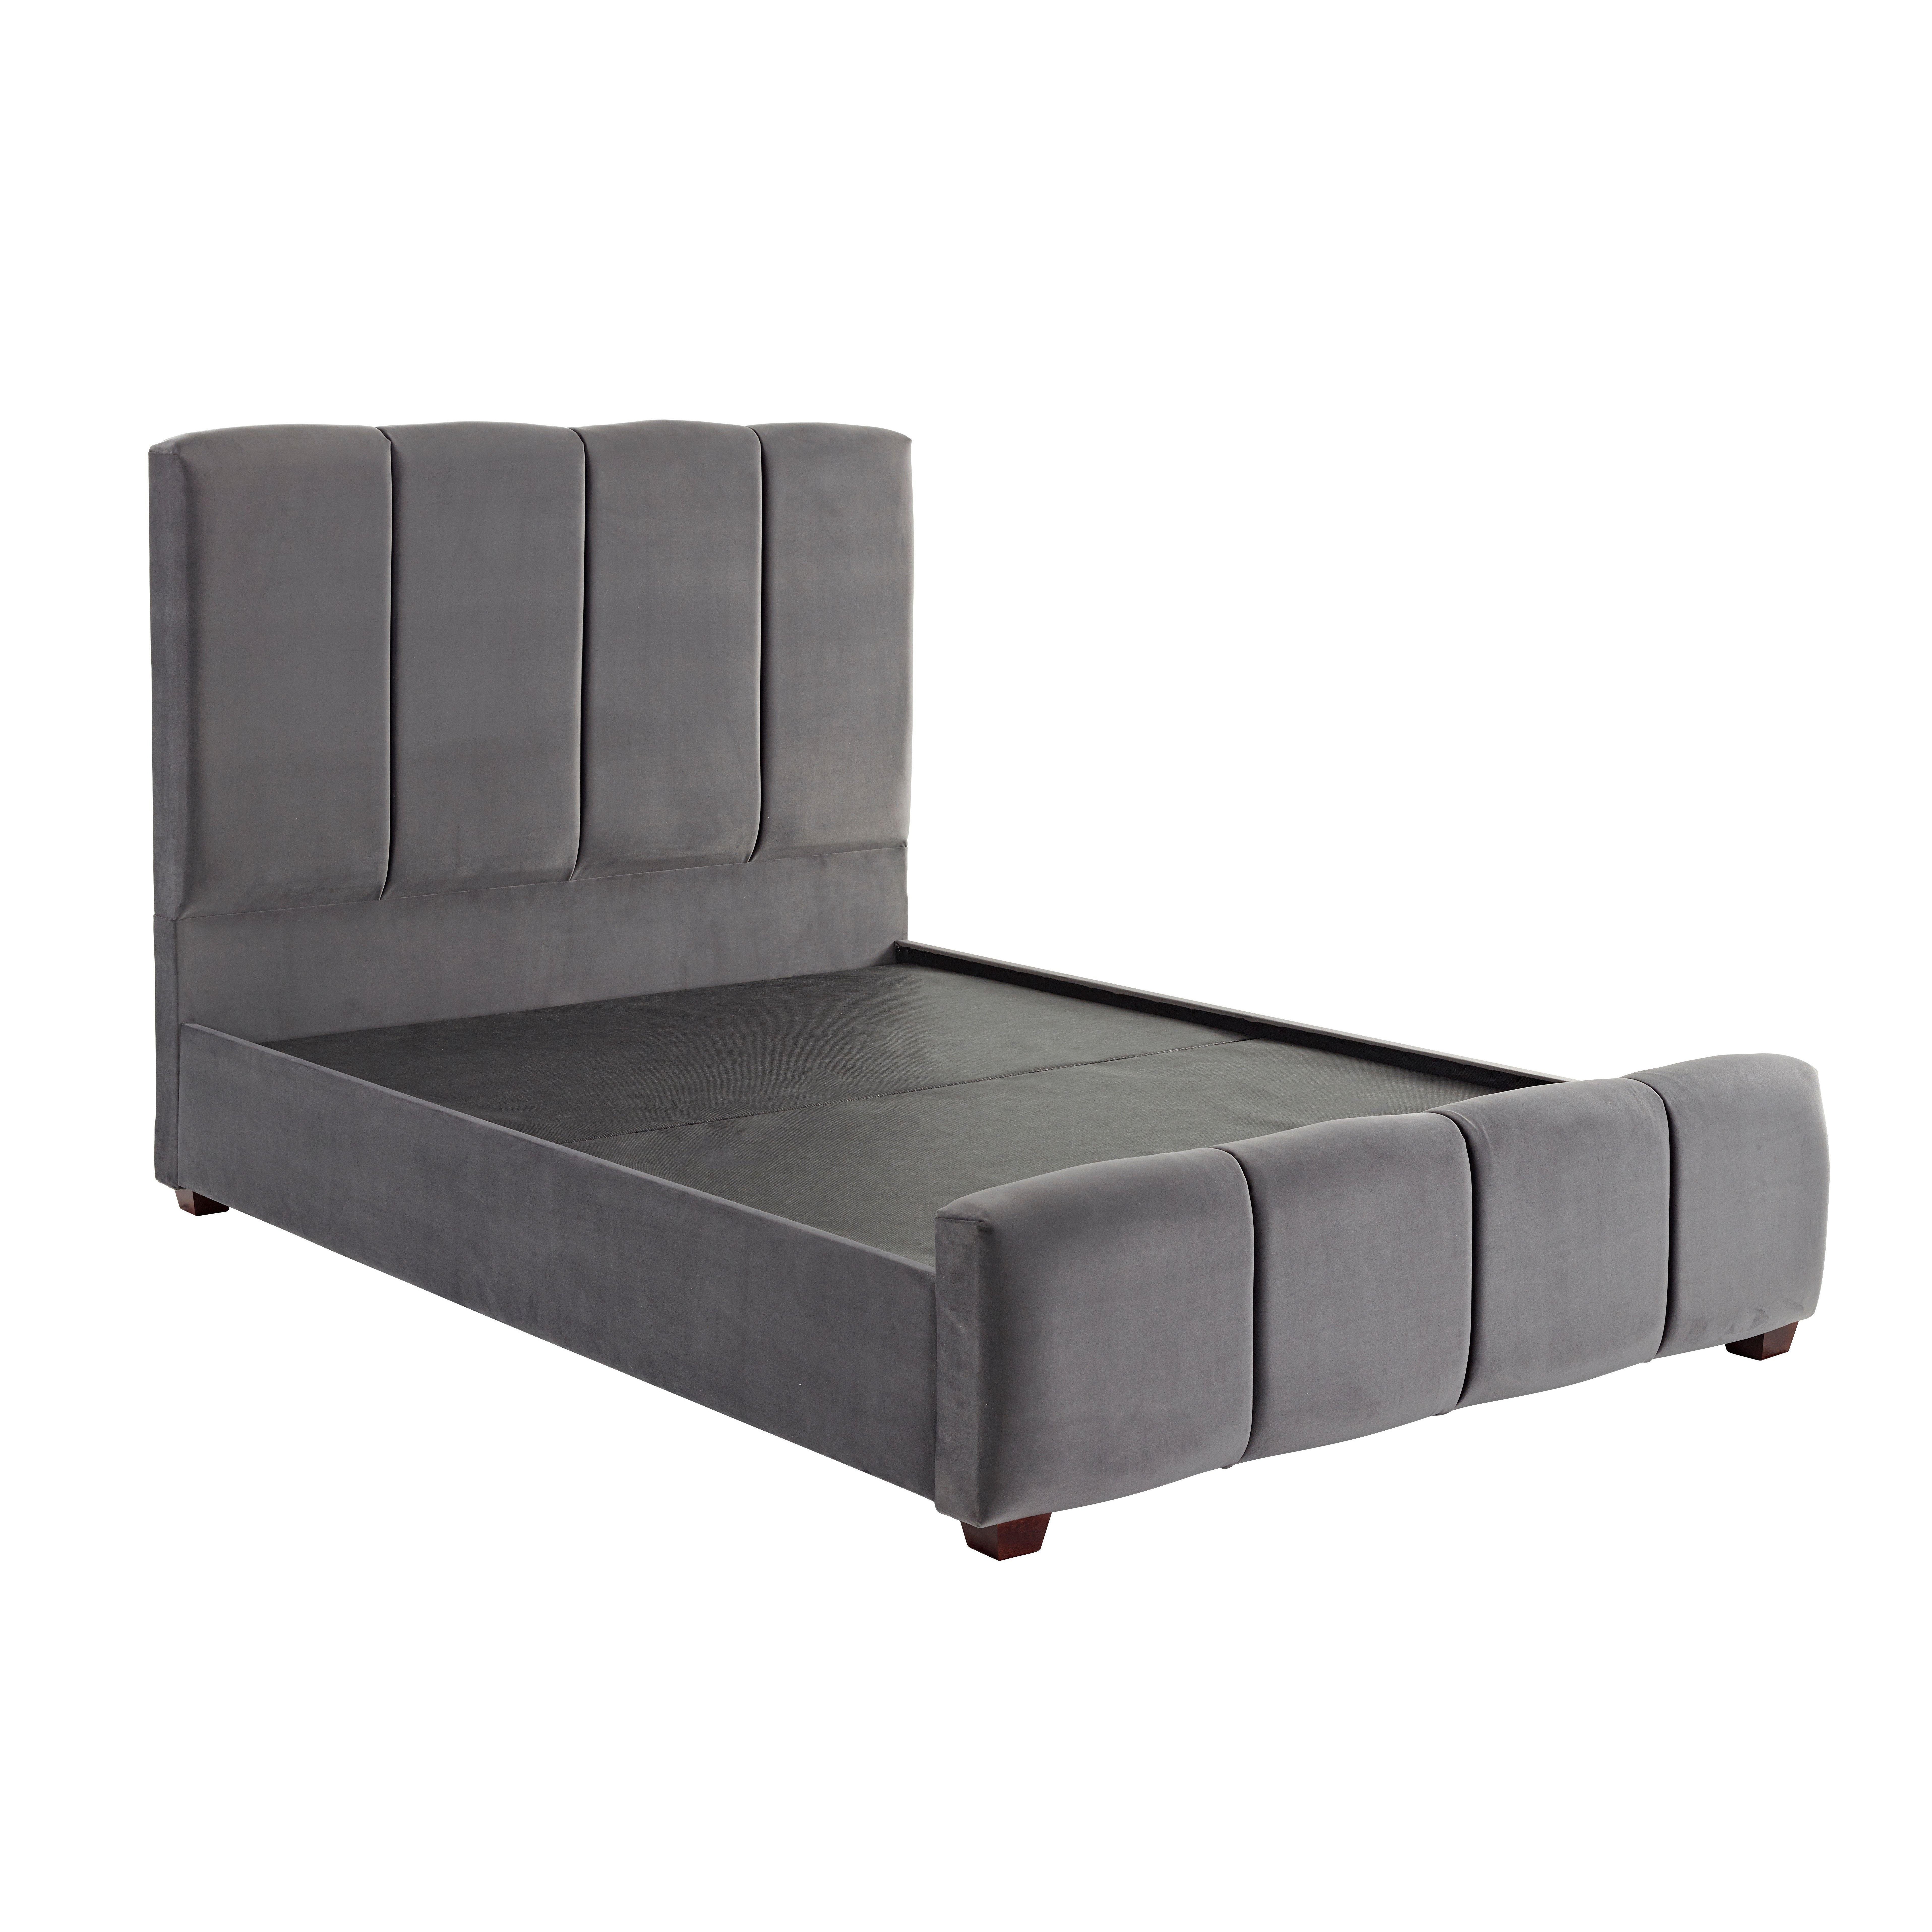 Claire Panel Luxury Crushed Velvet Upholstered Bed Frame Steel Grey - image 1